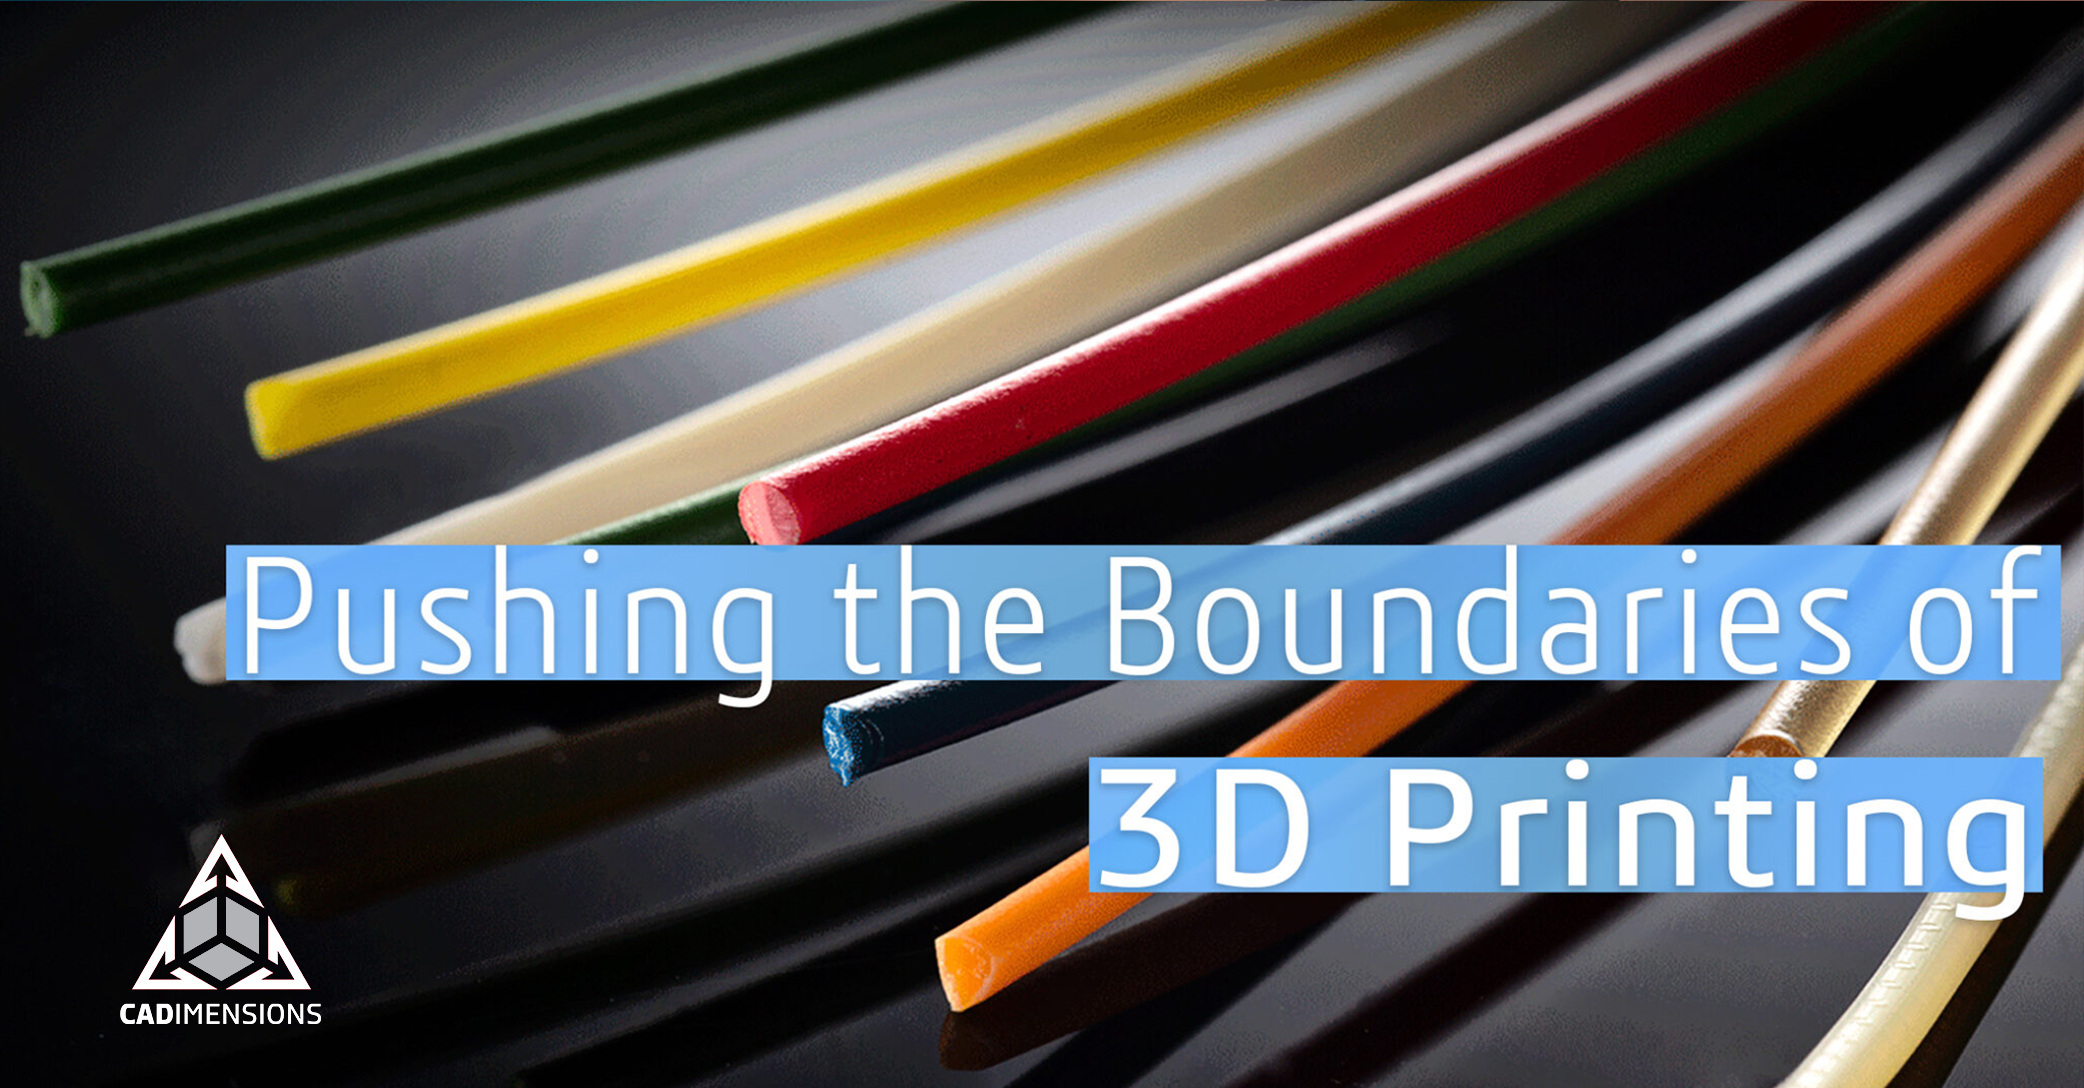 New 3D Printing Materials Push High-Performance Boundaries